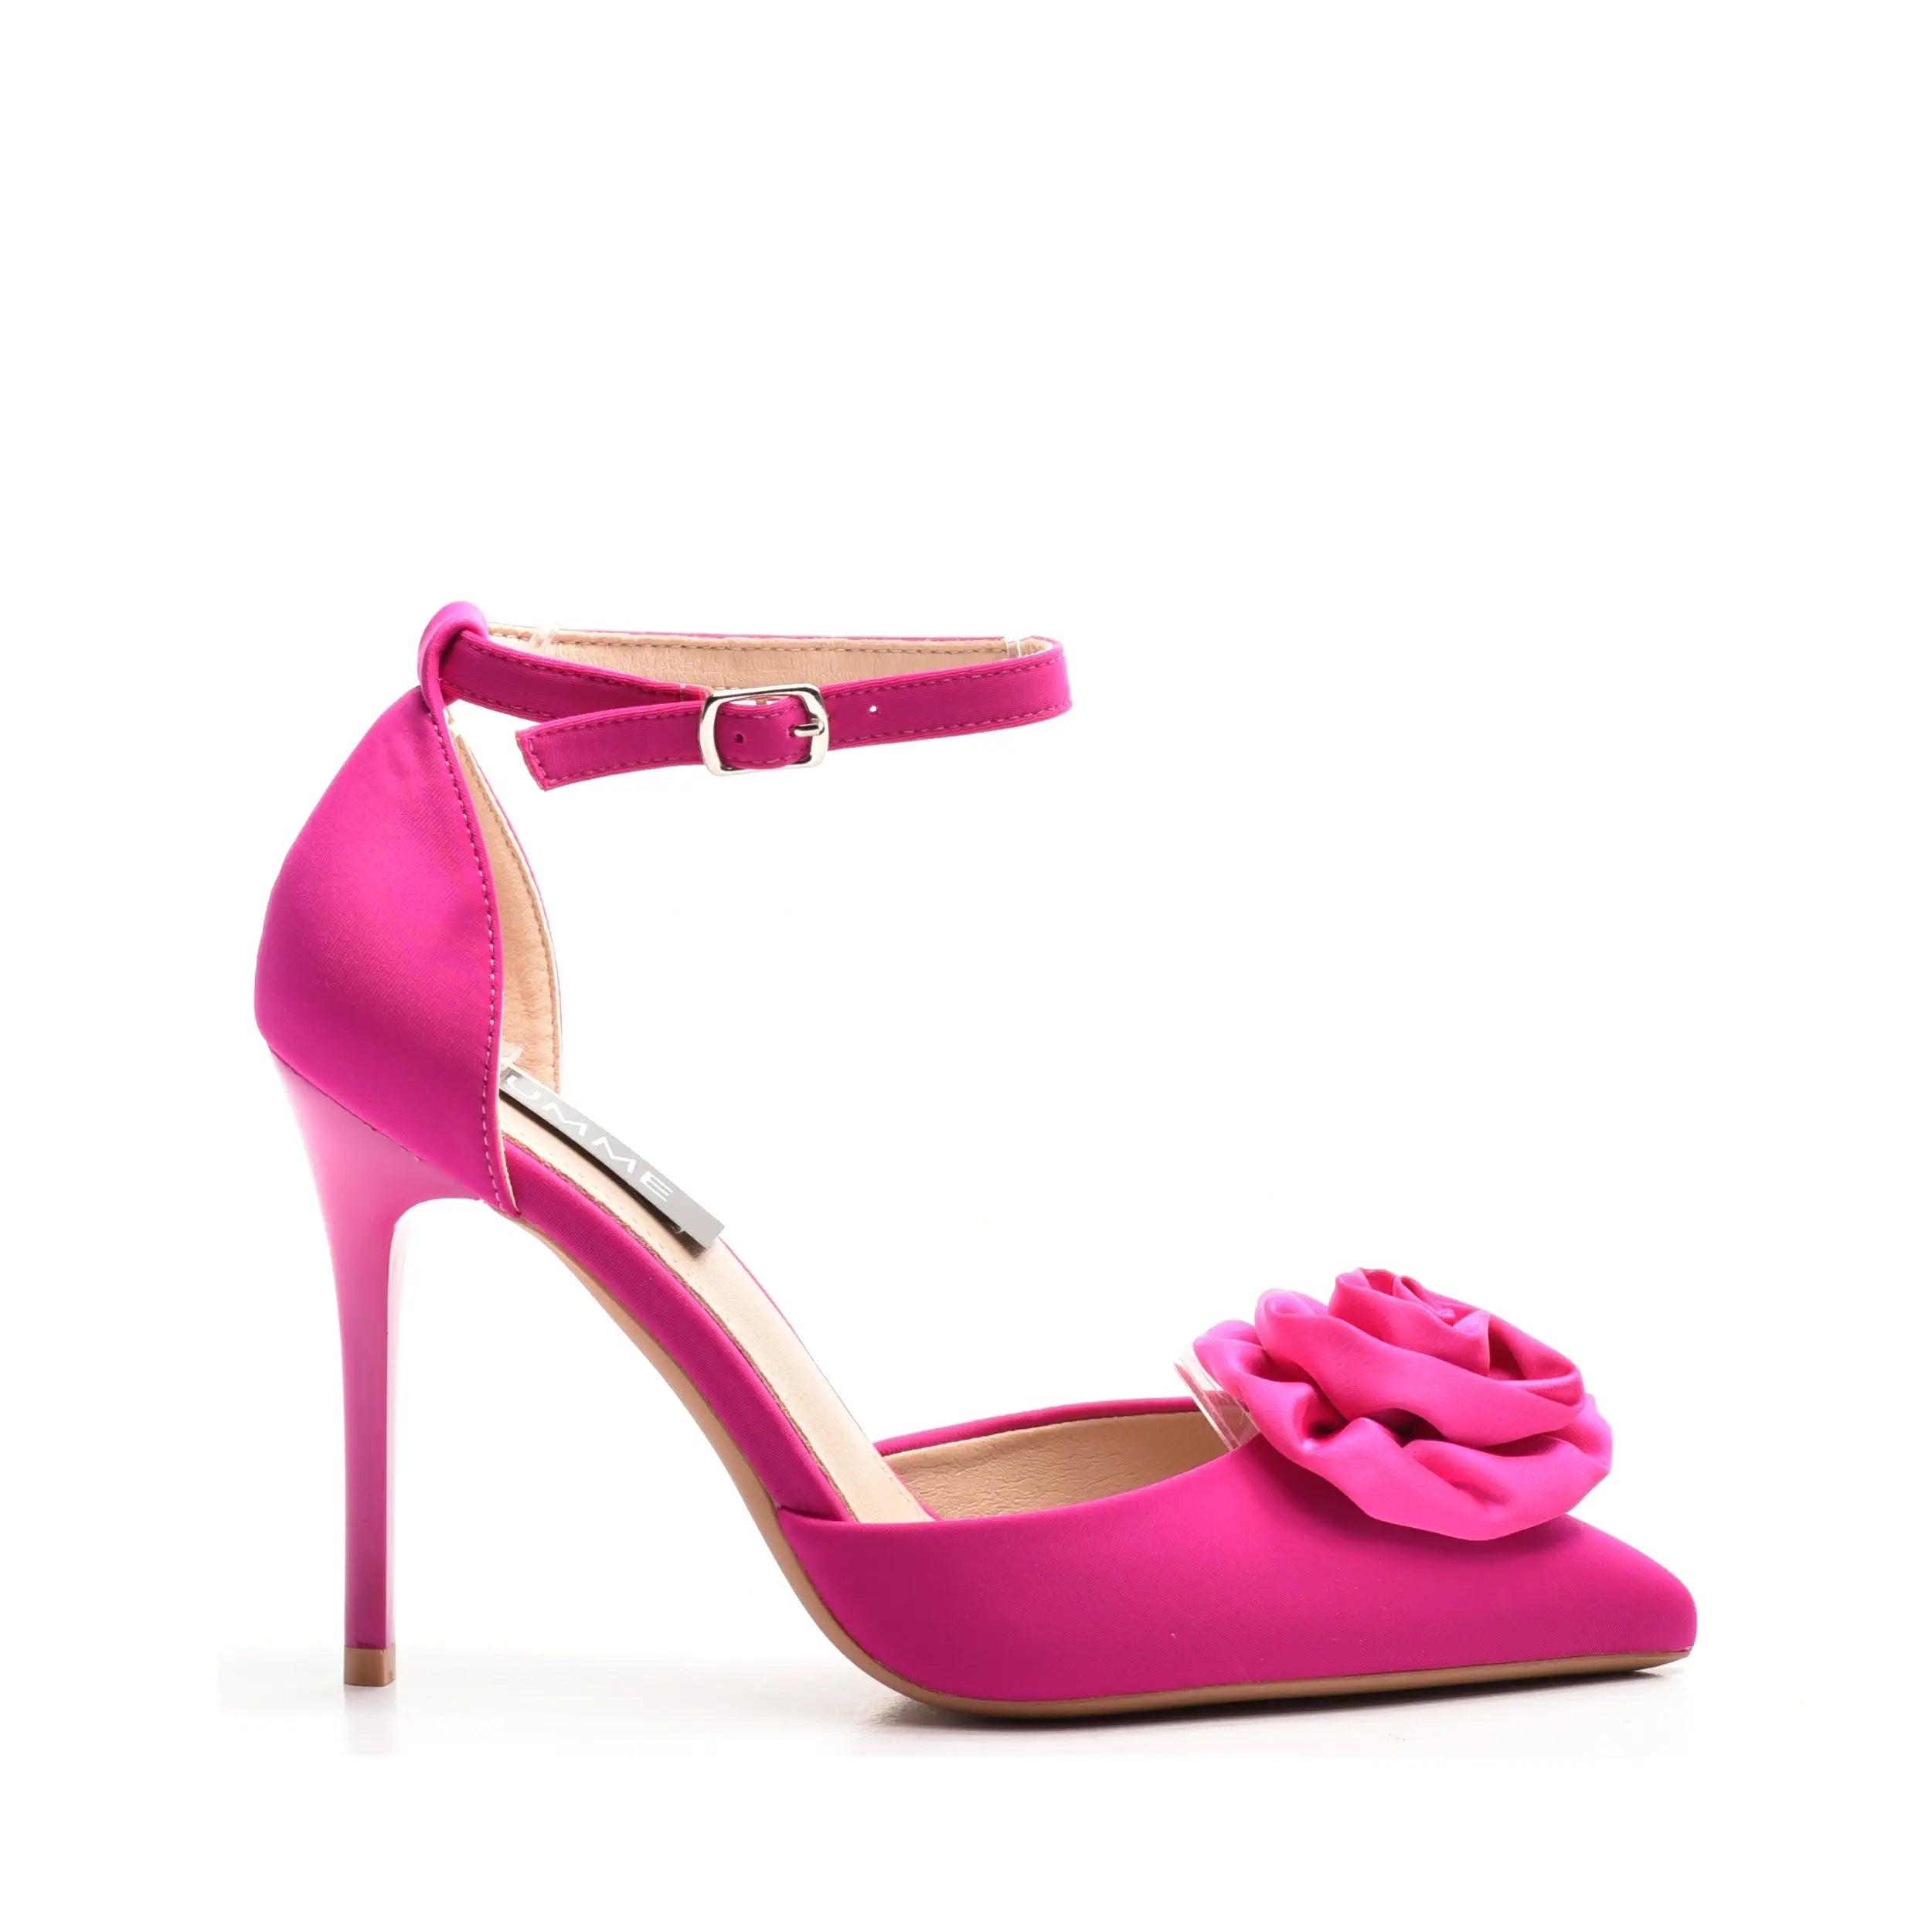 Pantofi roz cu toc subtire si decor floral, eleganti si chic